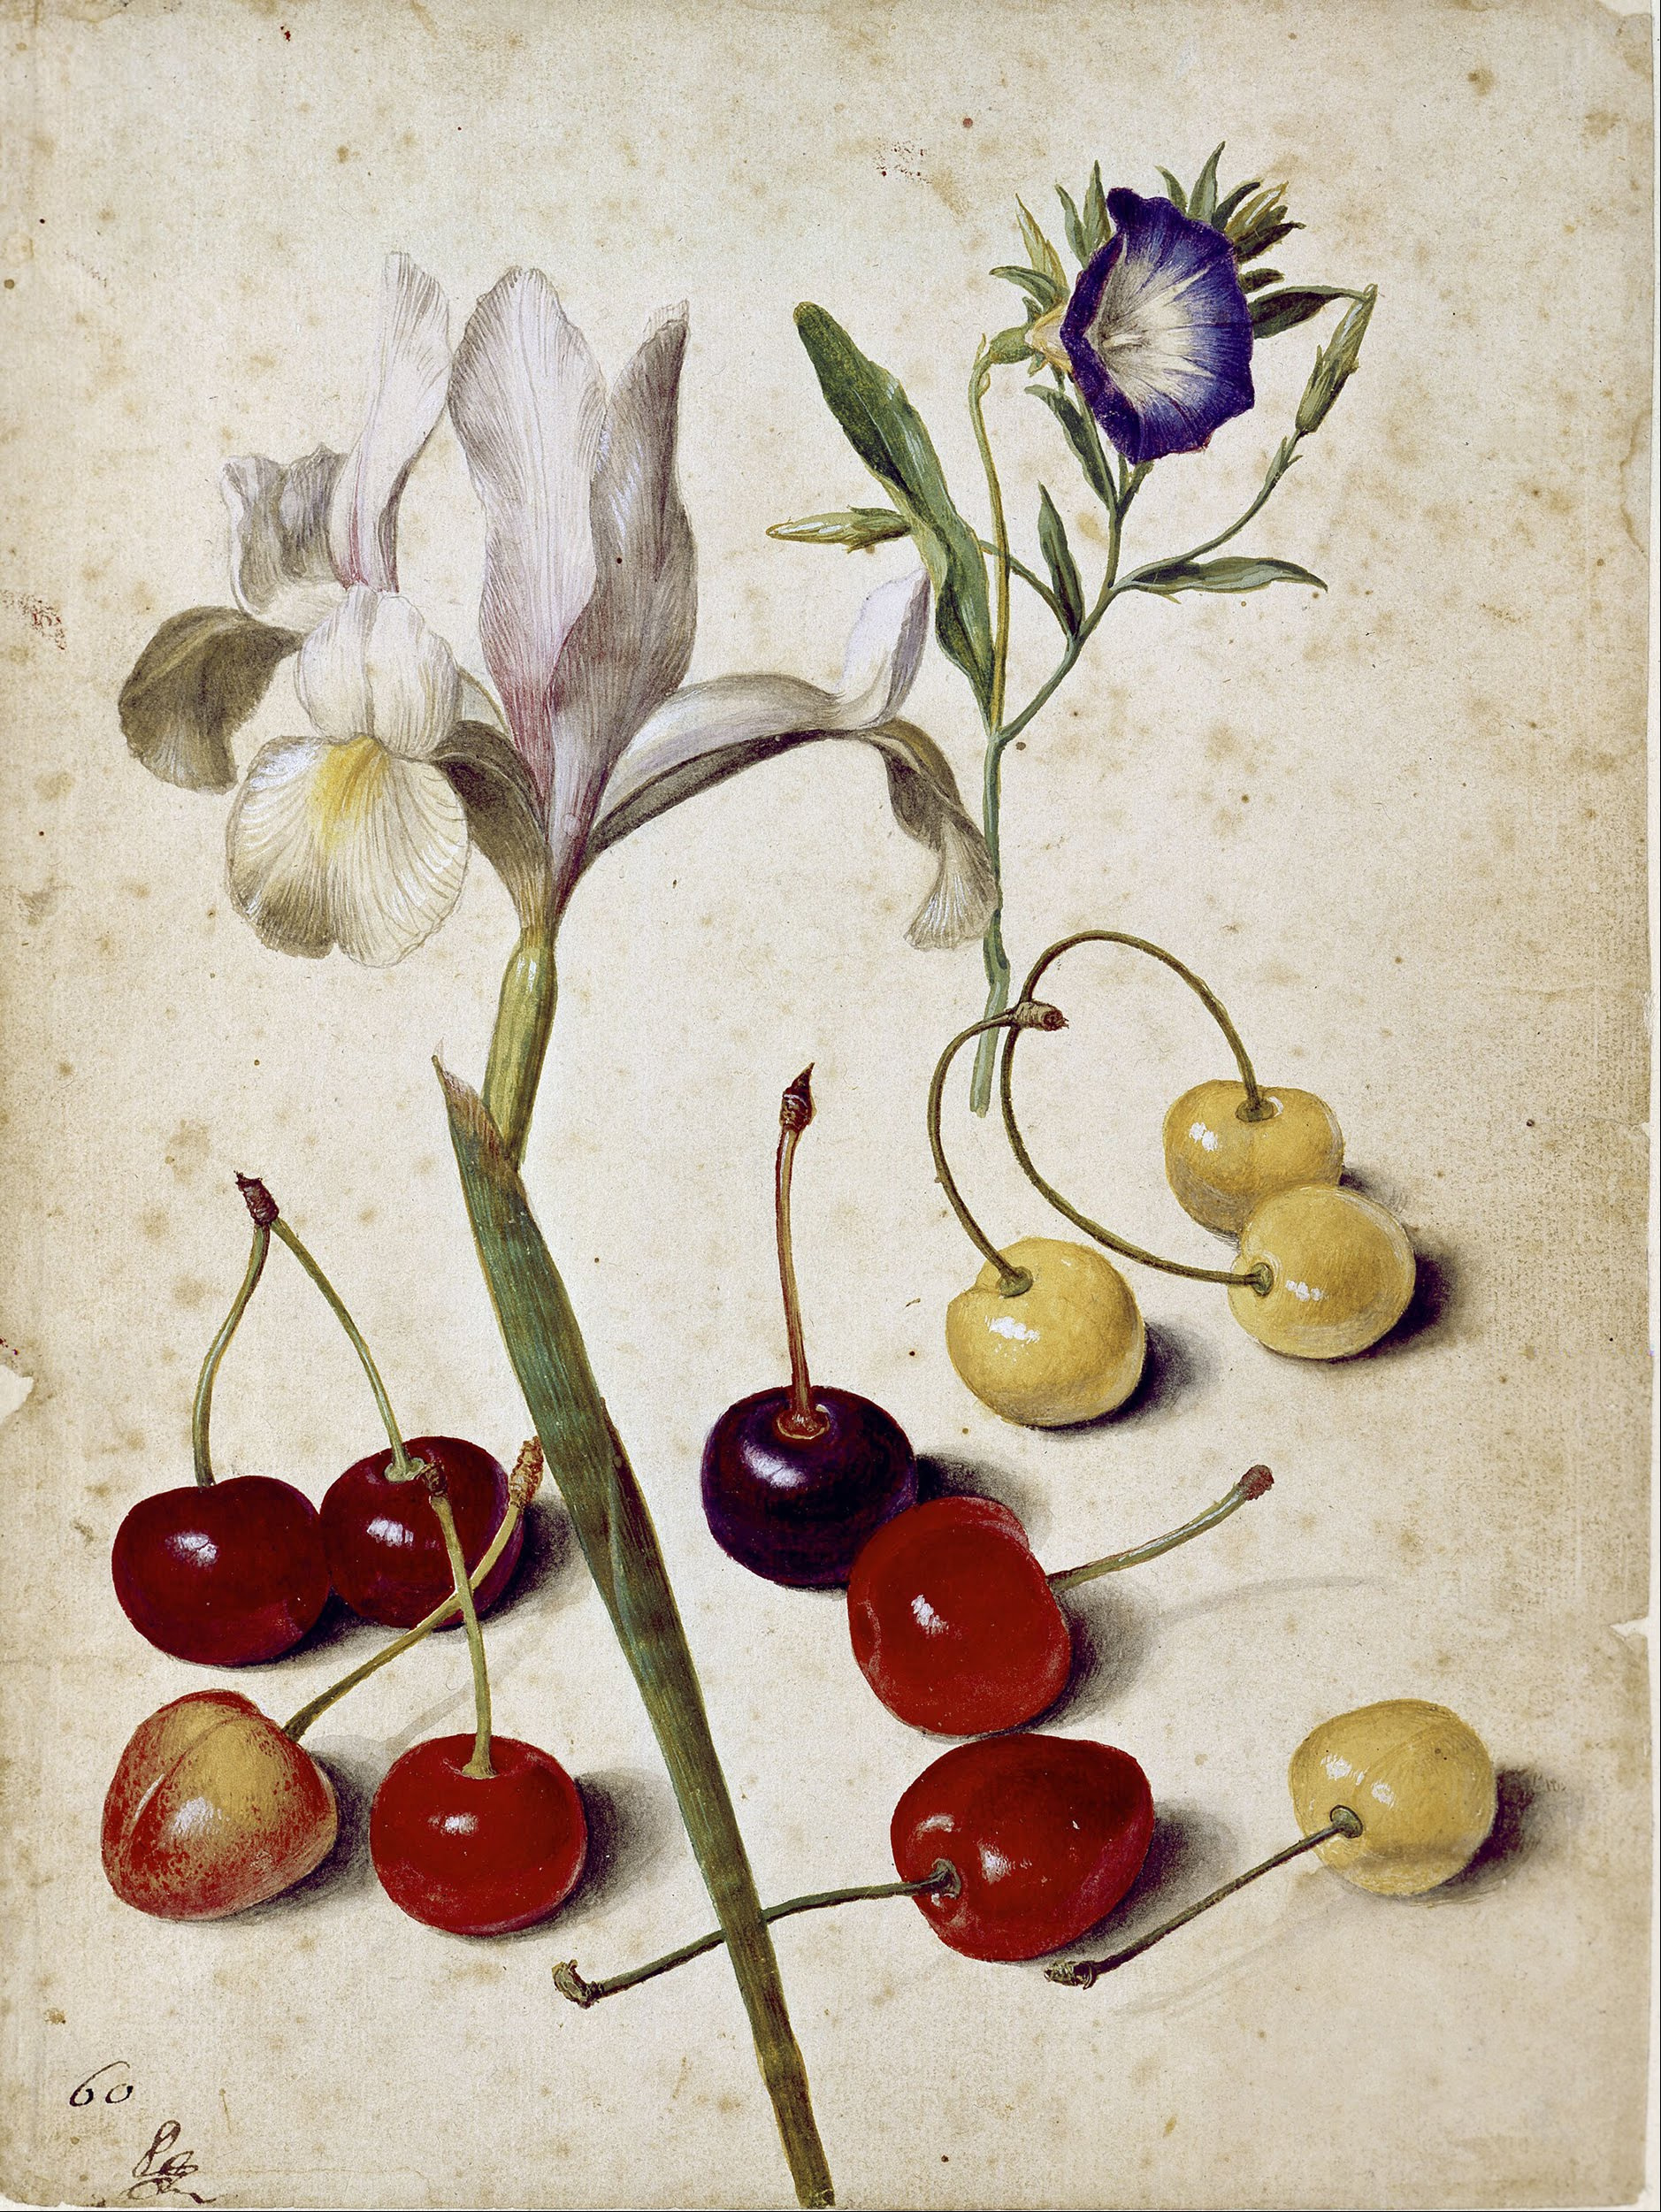 Georg Flegel - Spanish iris, morning glory, and cherries - Google Art Project